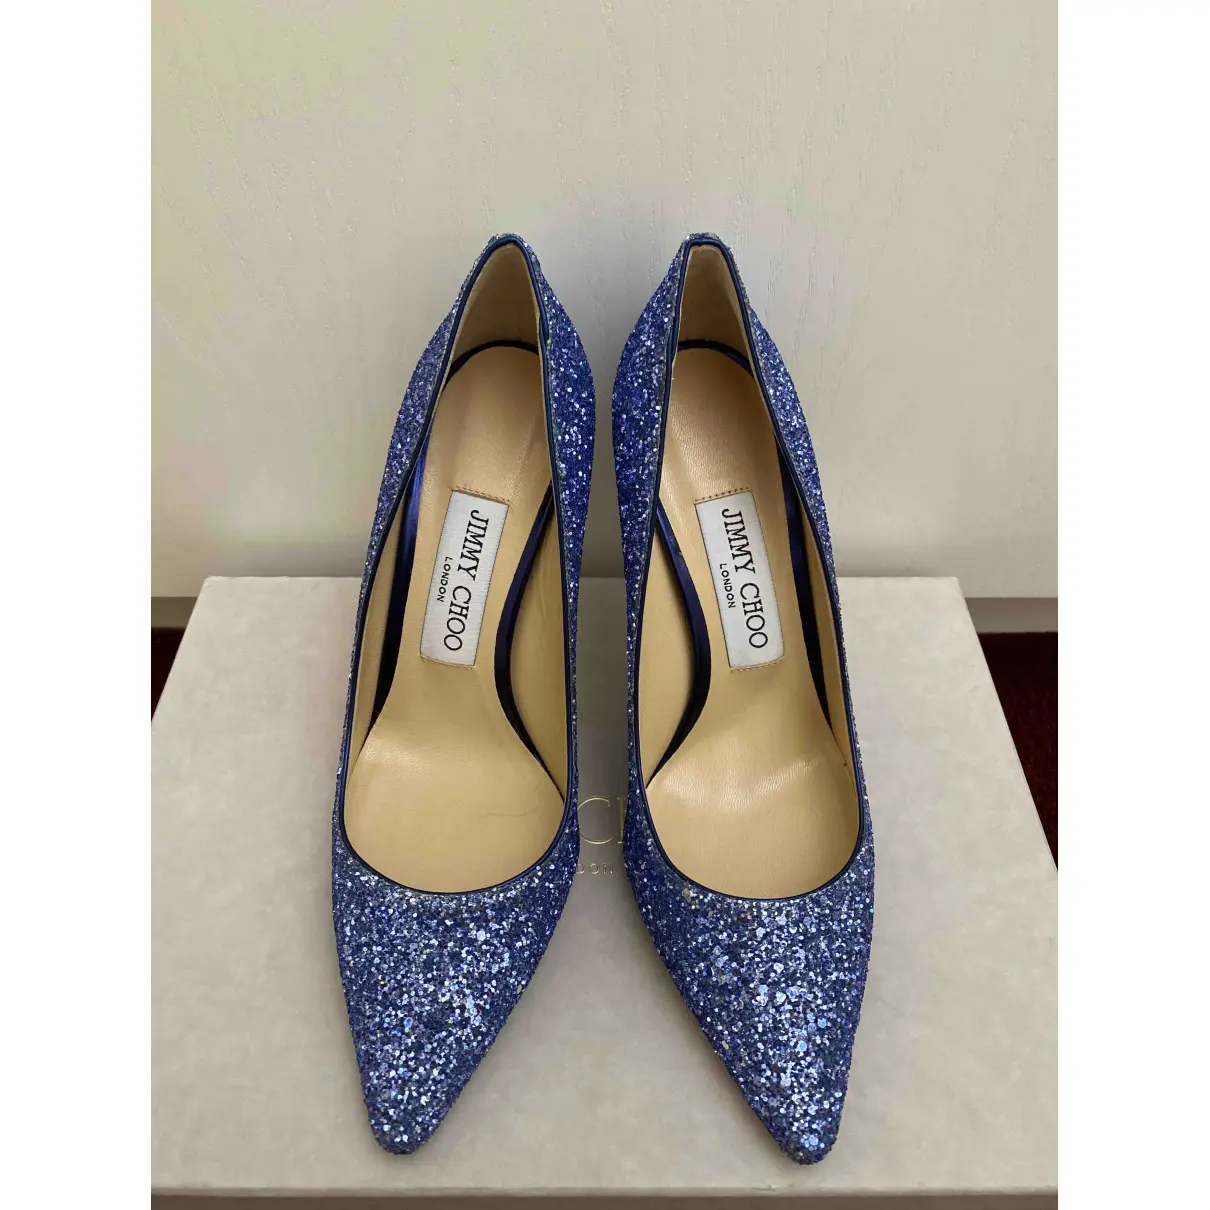 Buy Jimmy Choo Romy glitter heels online